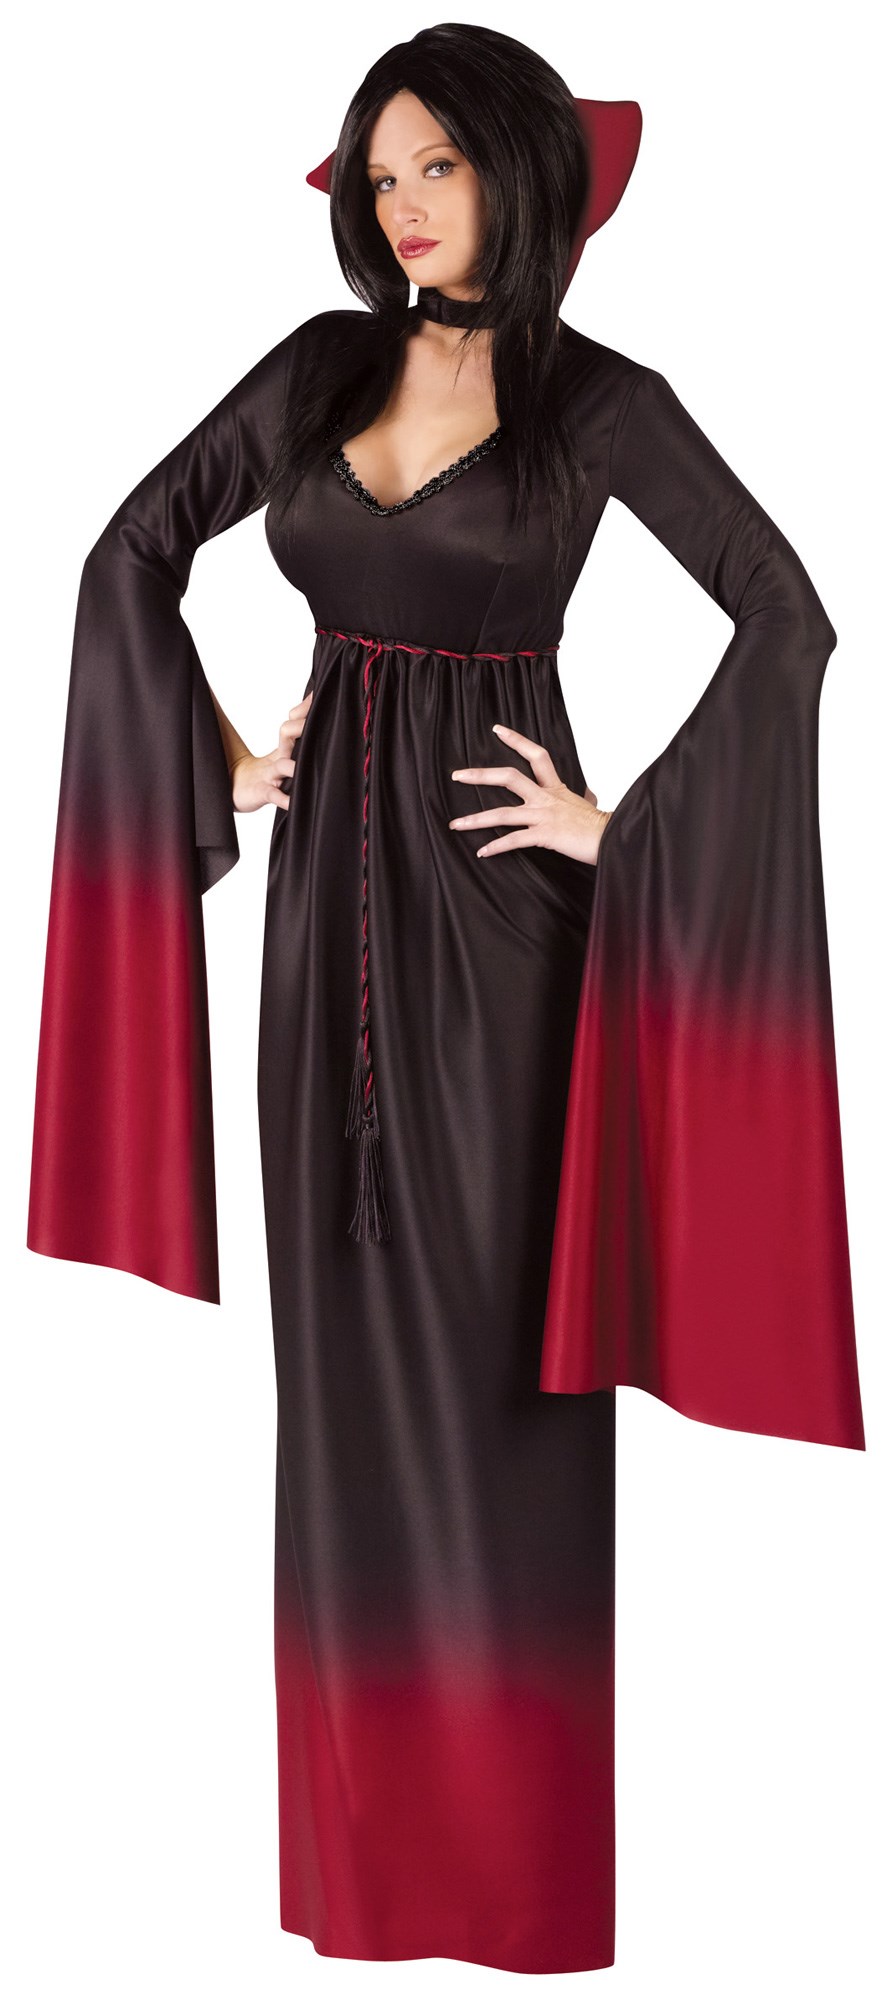 Blood Vampiress Adult Costume